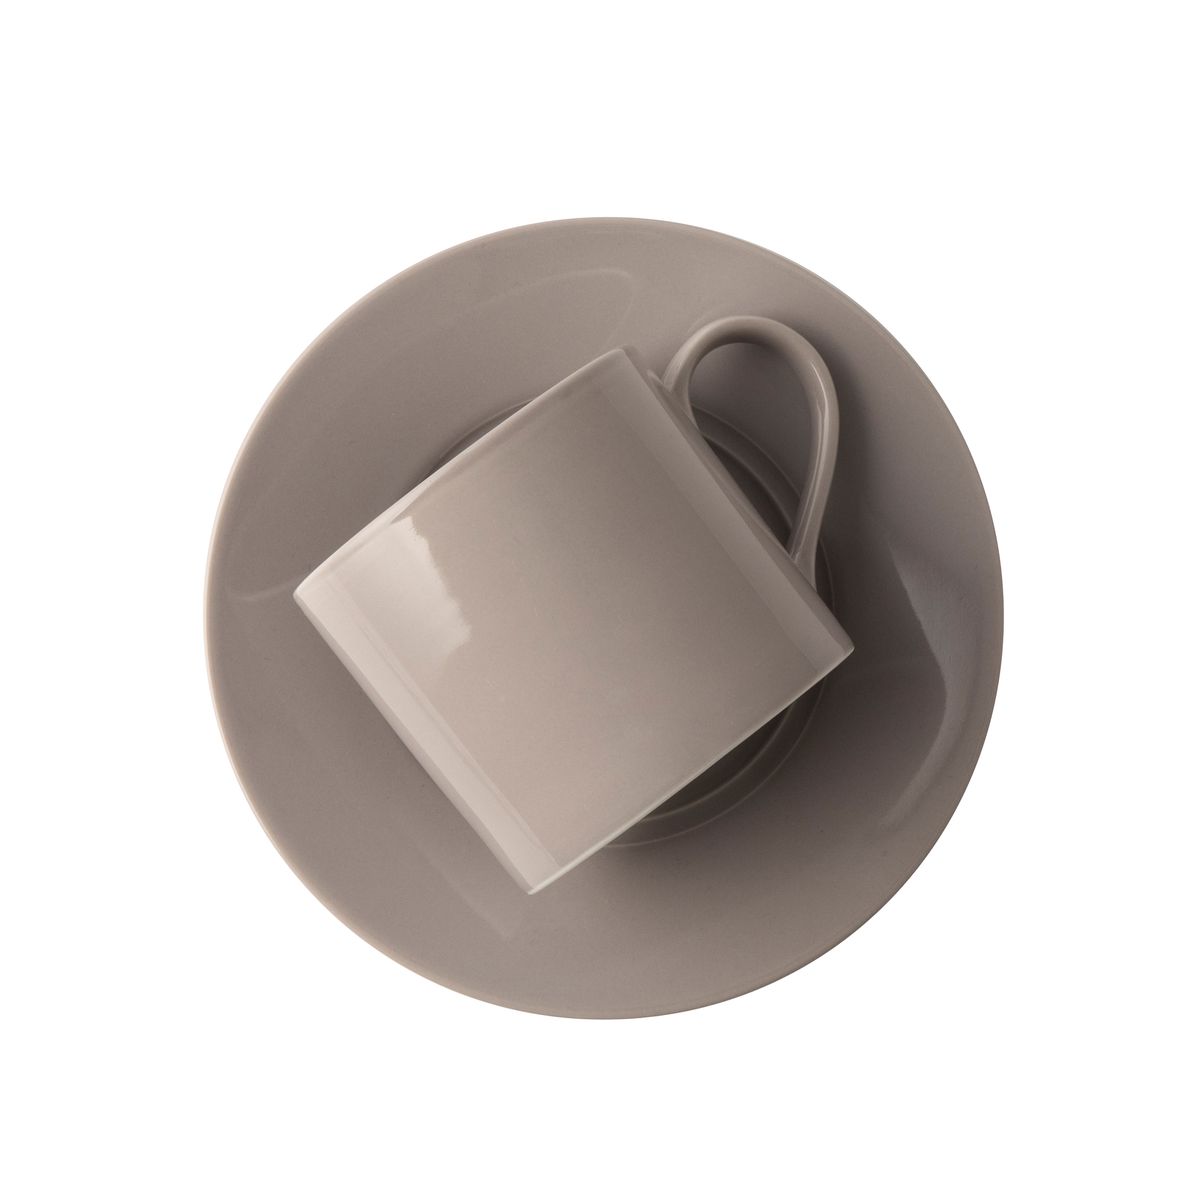 Omada Maxim Light Grey Cappuccino C&S 4pce Set in gift box